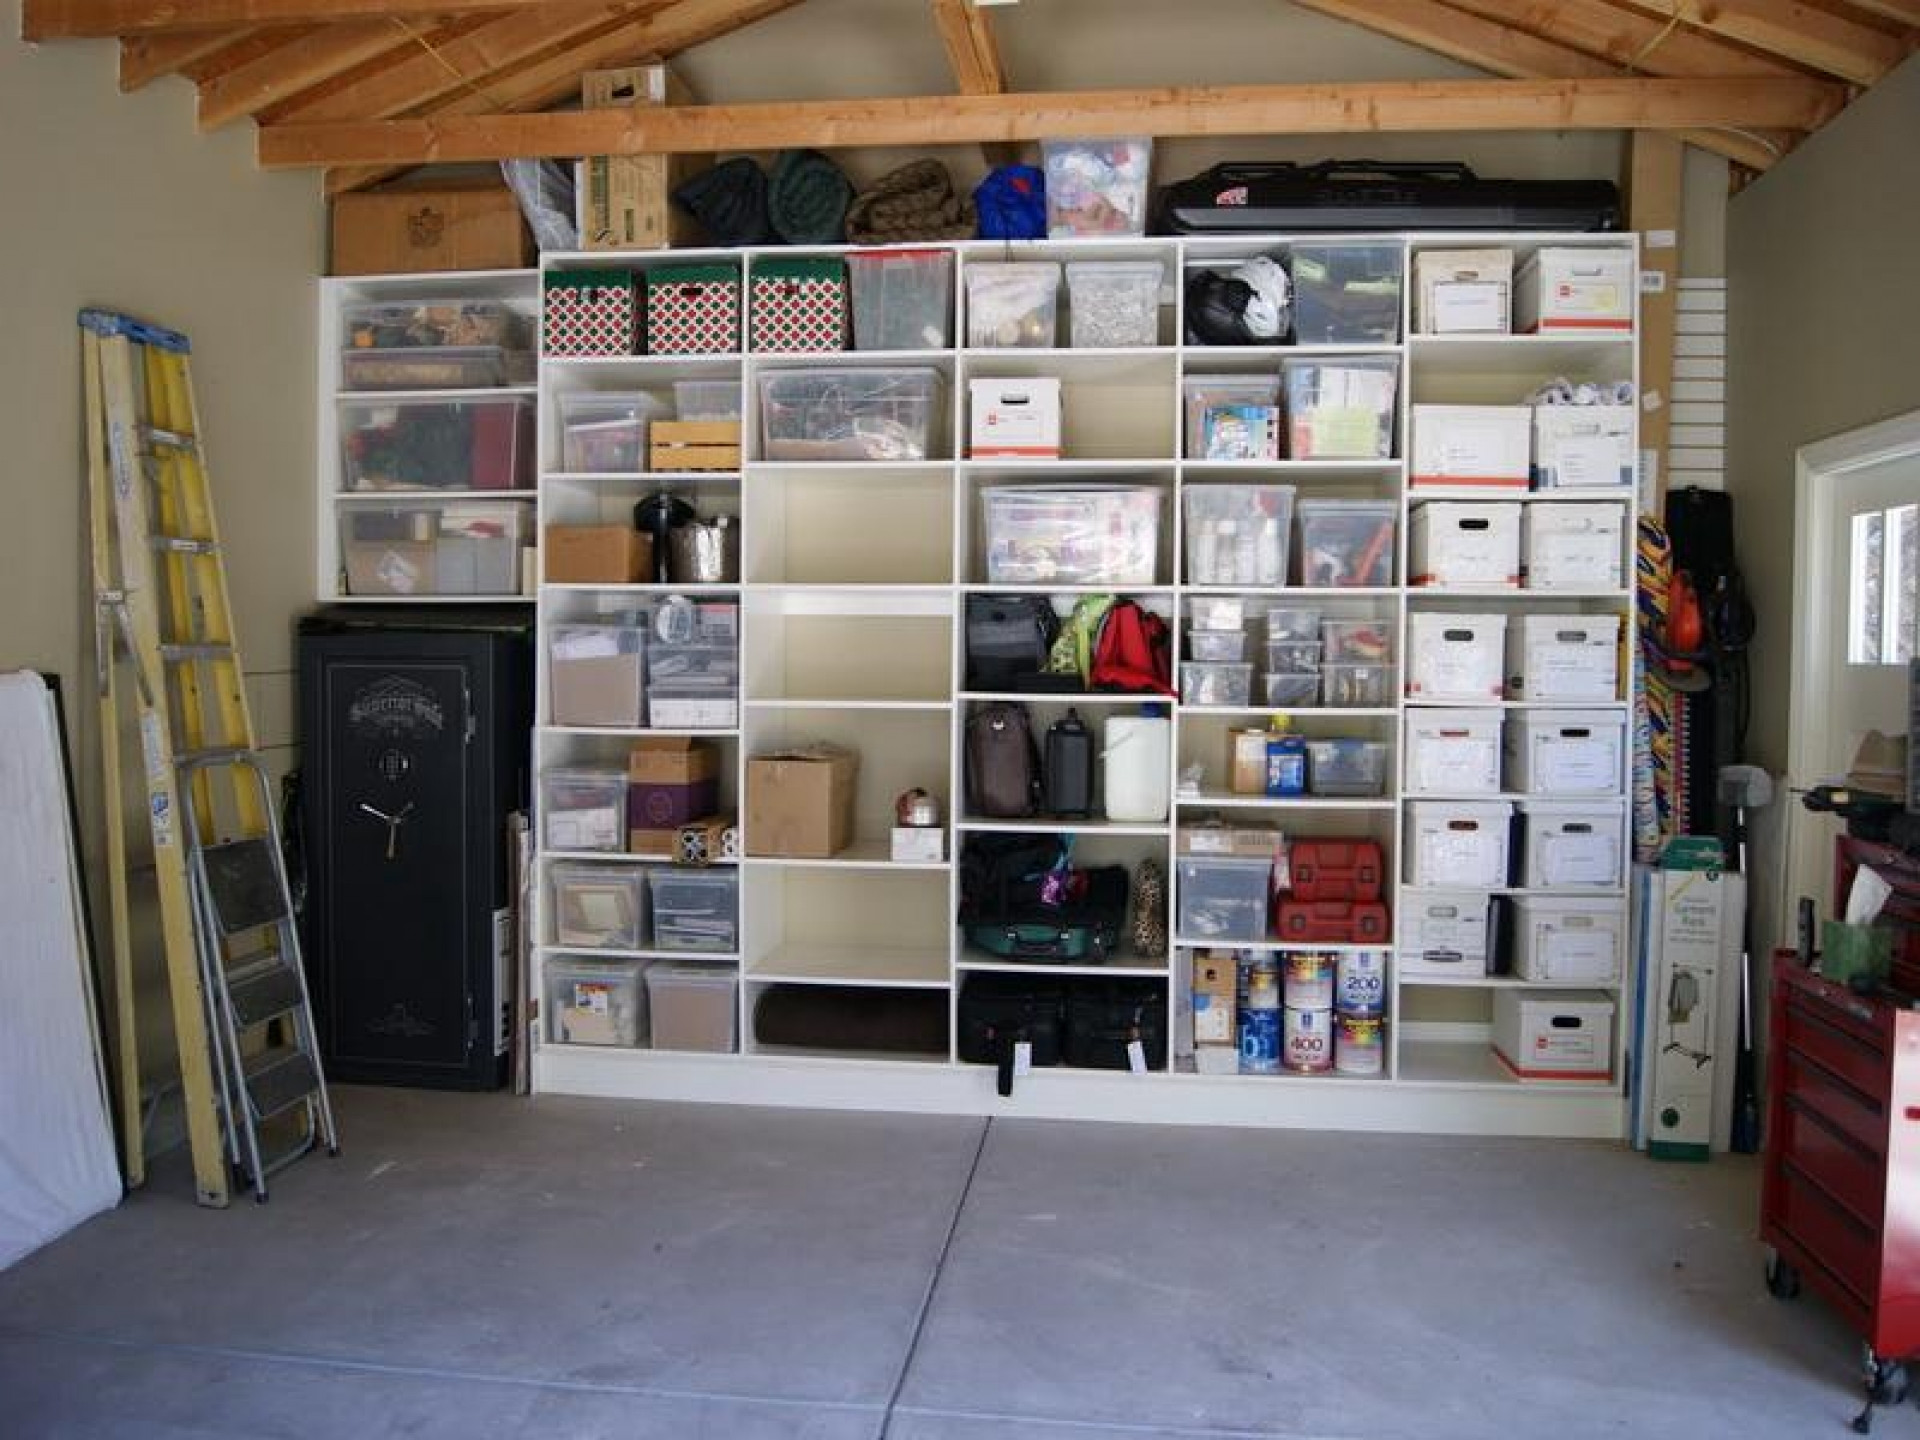 Best ideas about Small Garage Ideas
. Save or Pin Garage Storage Ideas Iimajackrussell Garages Now.